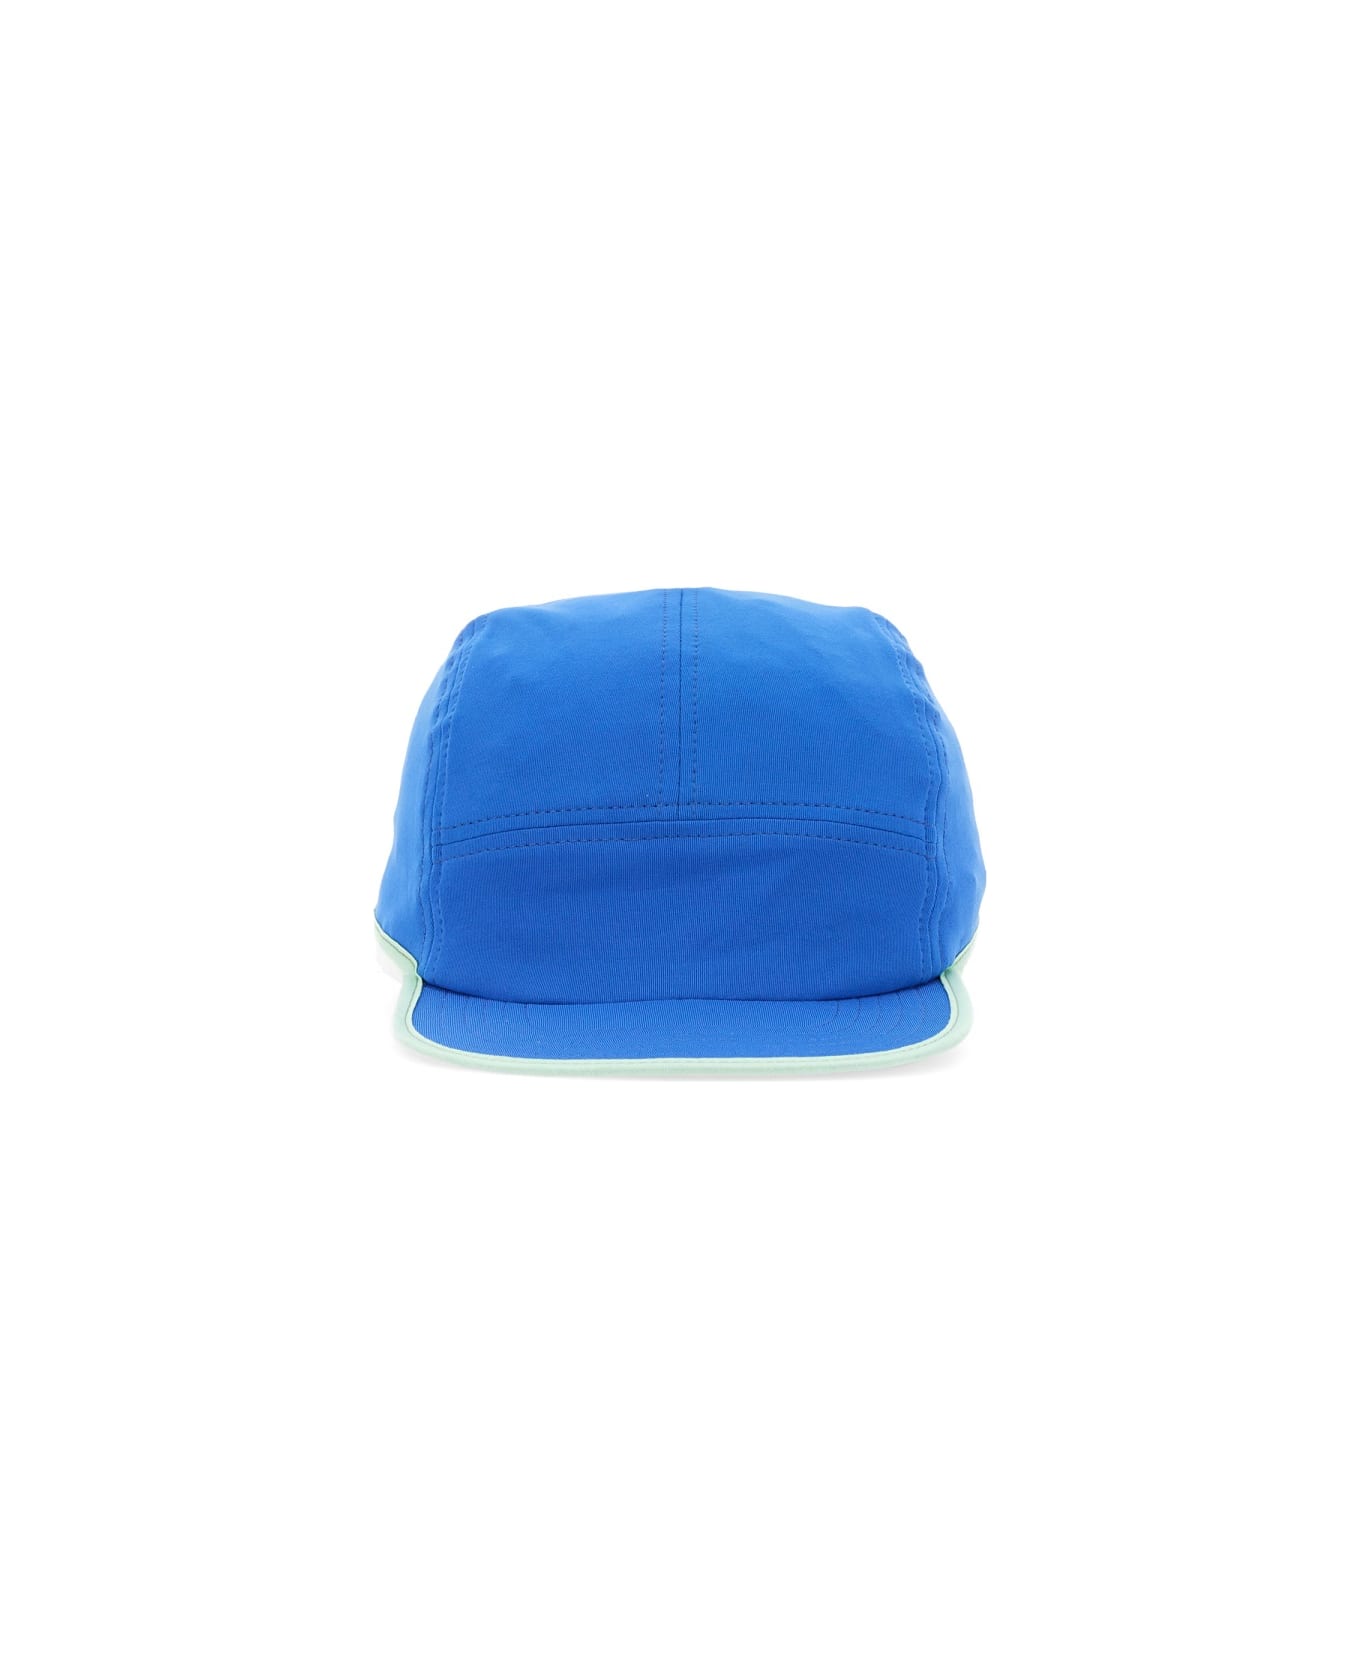 Sunnei Hat With Visor - BLUE 帽子